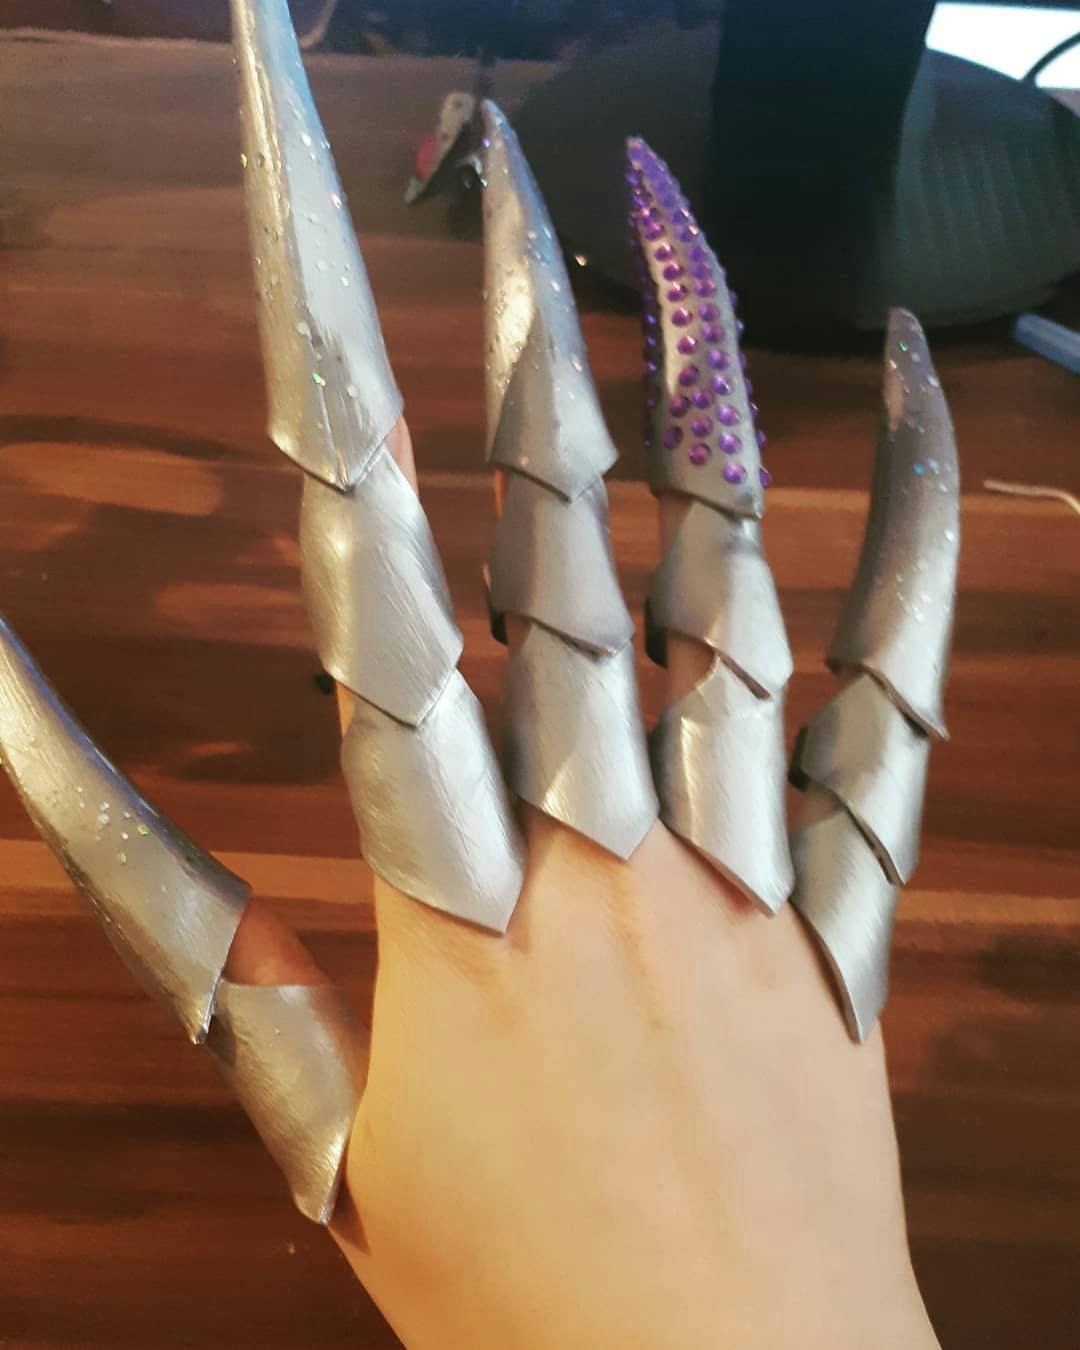 Evelyn K/DA claws made from foam by Merrlia in a skill trade.